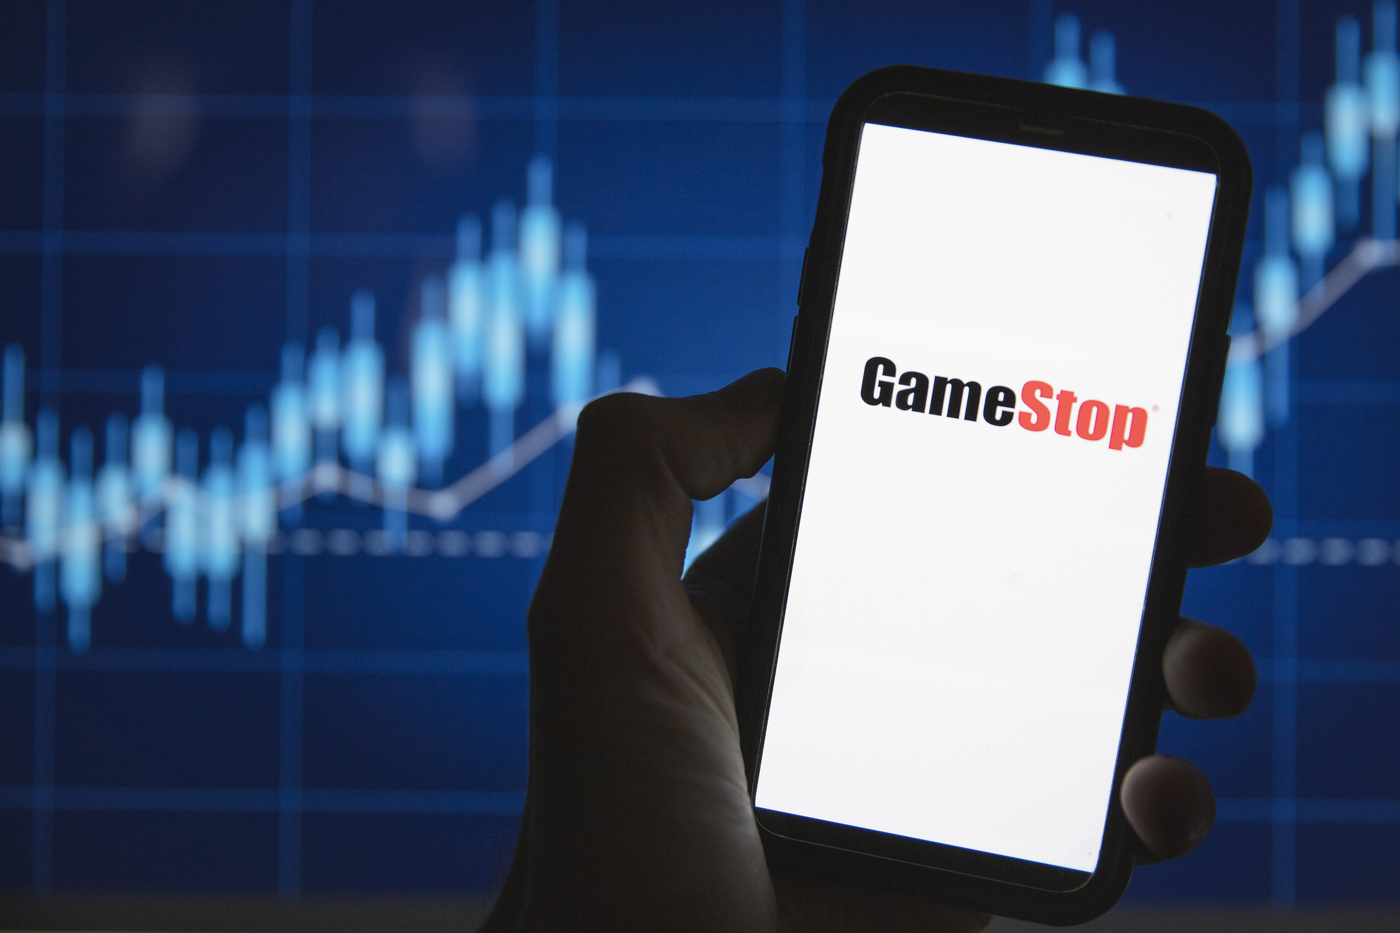 Gamestop stock, GME stock, Meme stocks, WallStreetBets